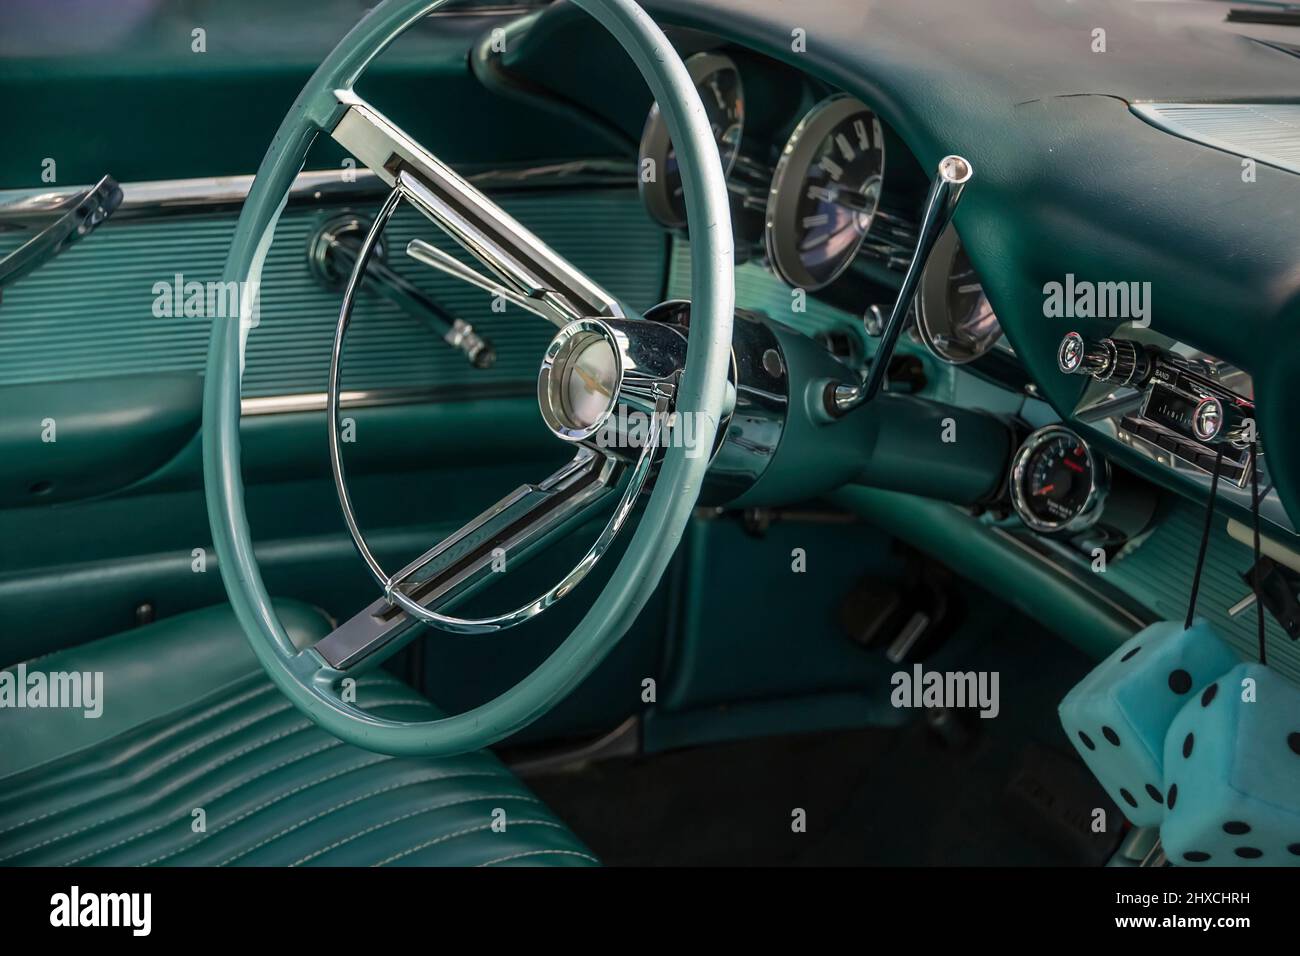 Car, classic car, green steering wheel fittings, interior trim Stock Photo